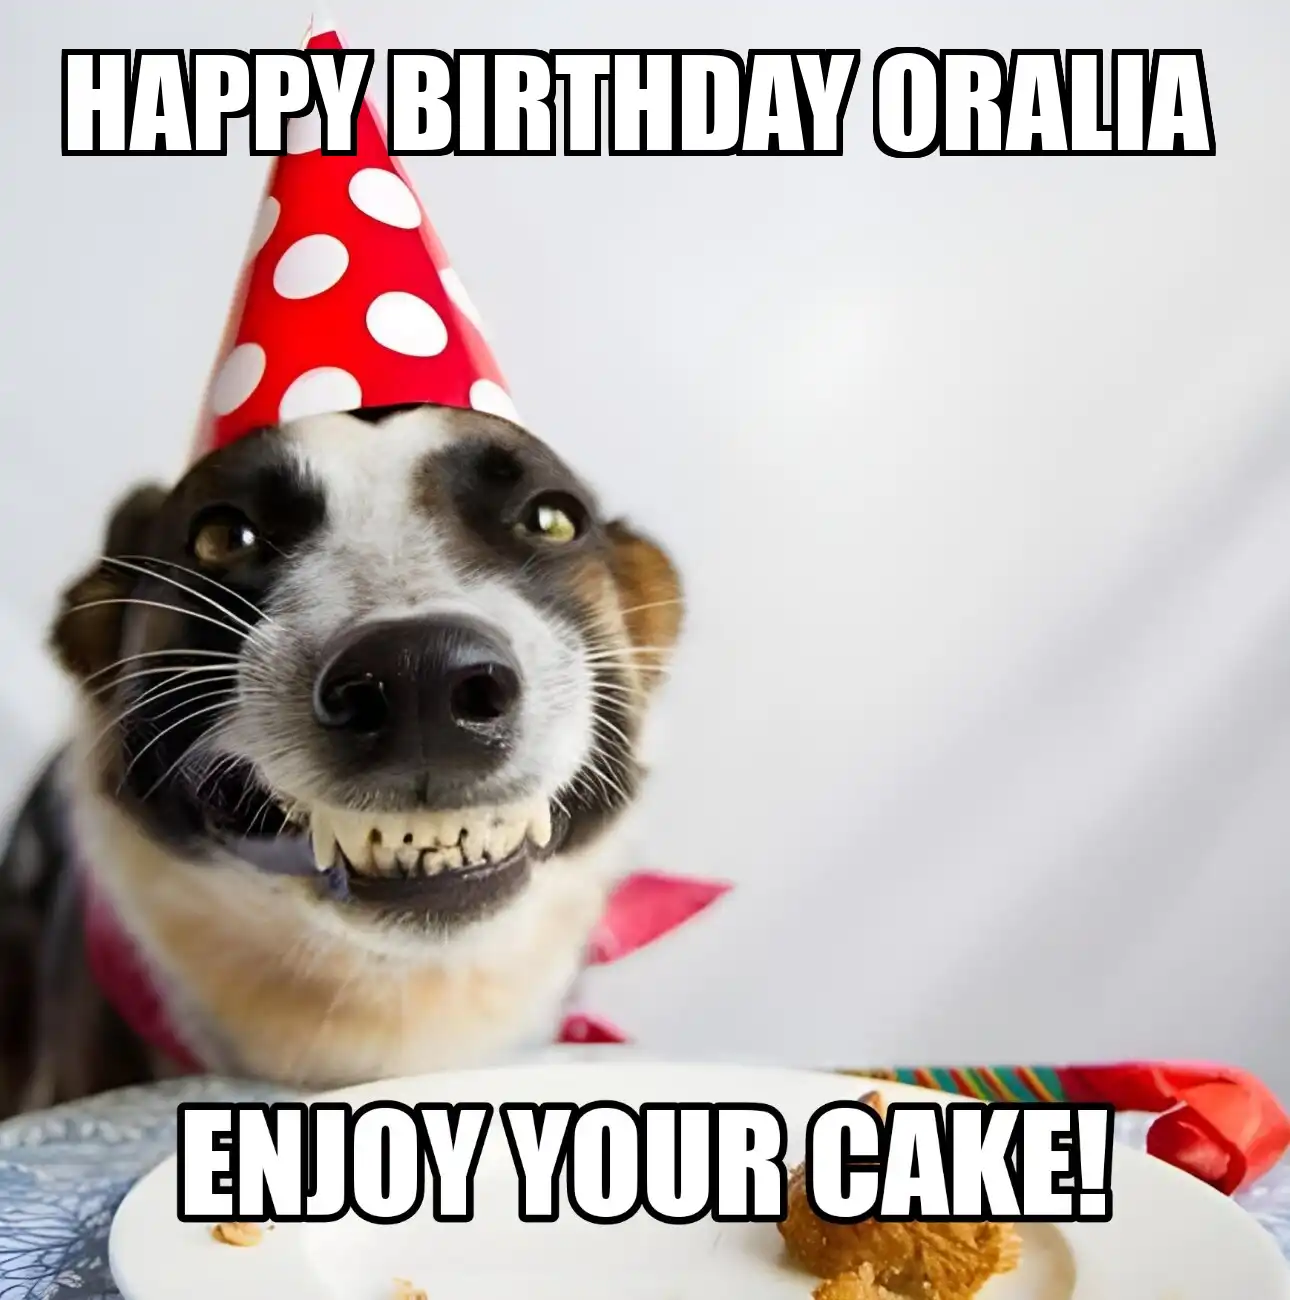 Happy Birthday Oralia Enjoy Your Cake Dog Meme